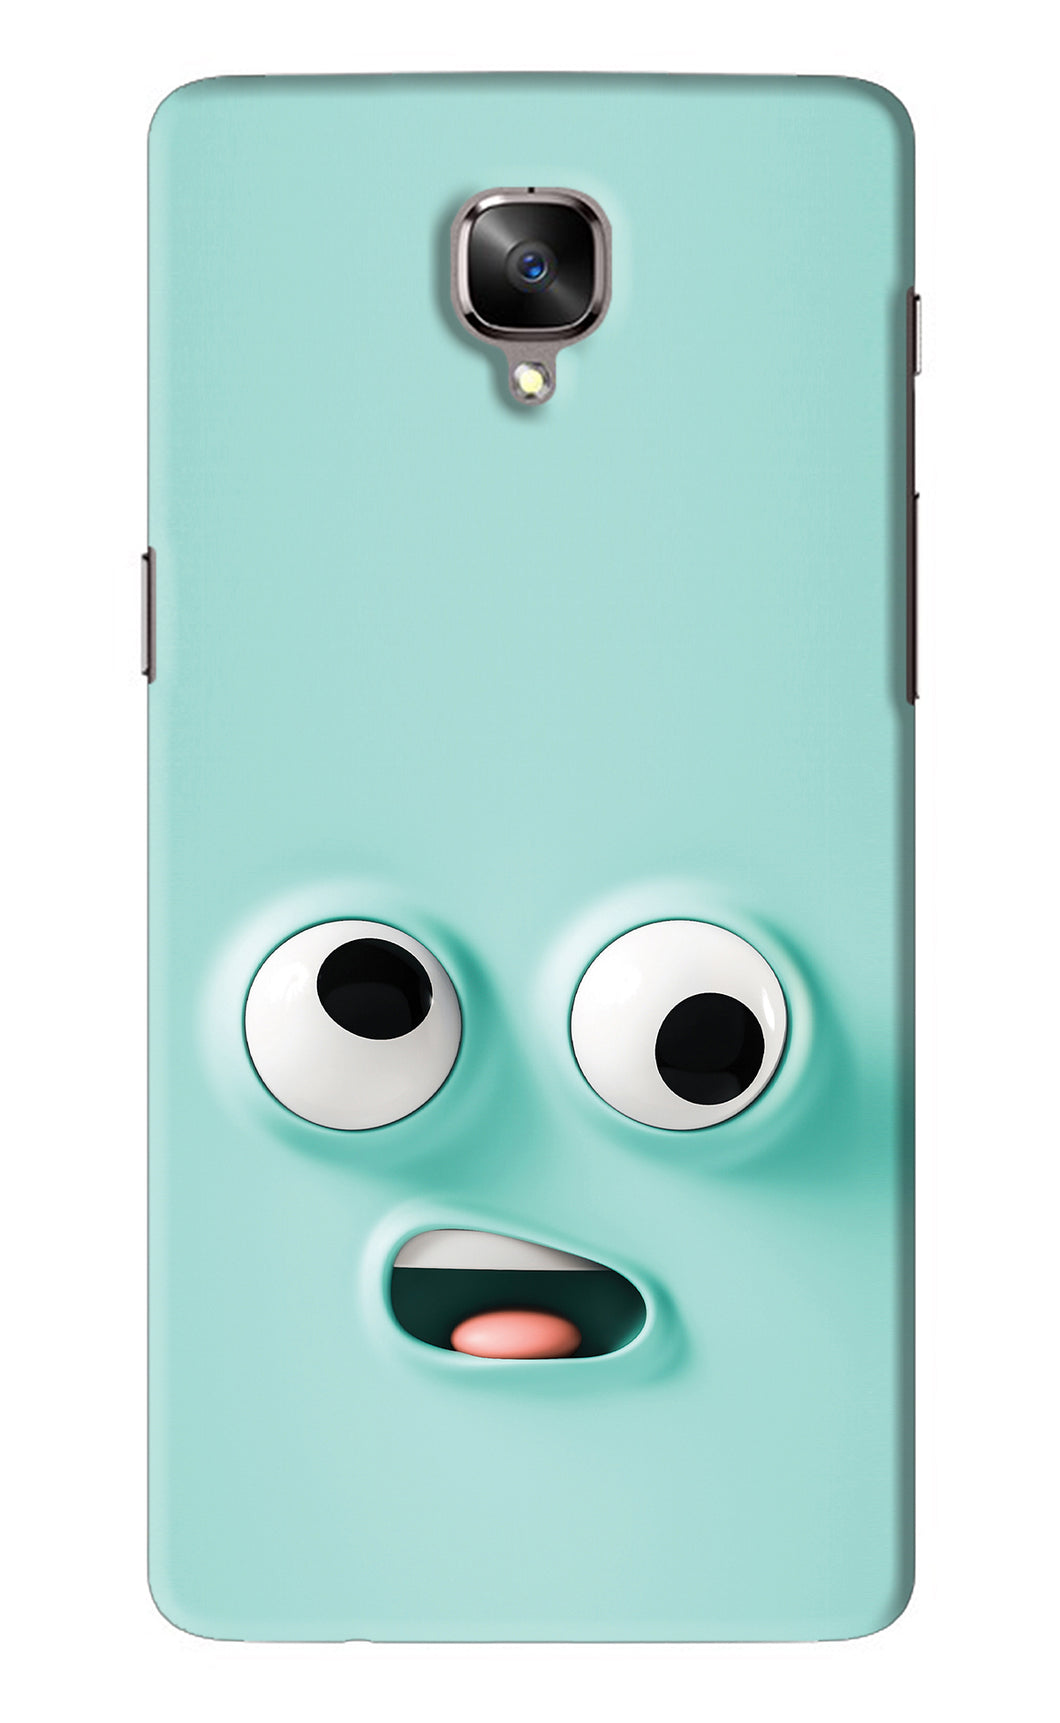 Silly Face Cartoon OnePlus 3 Back Skin Wrap